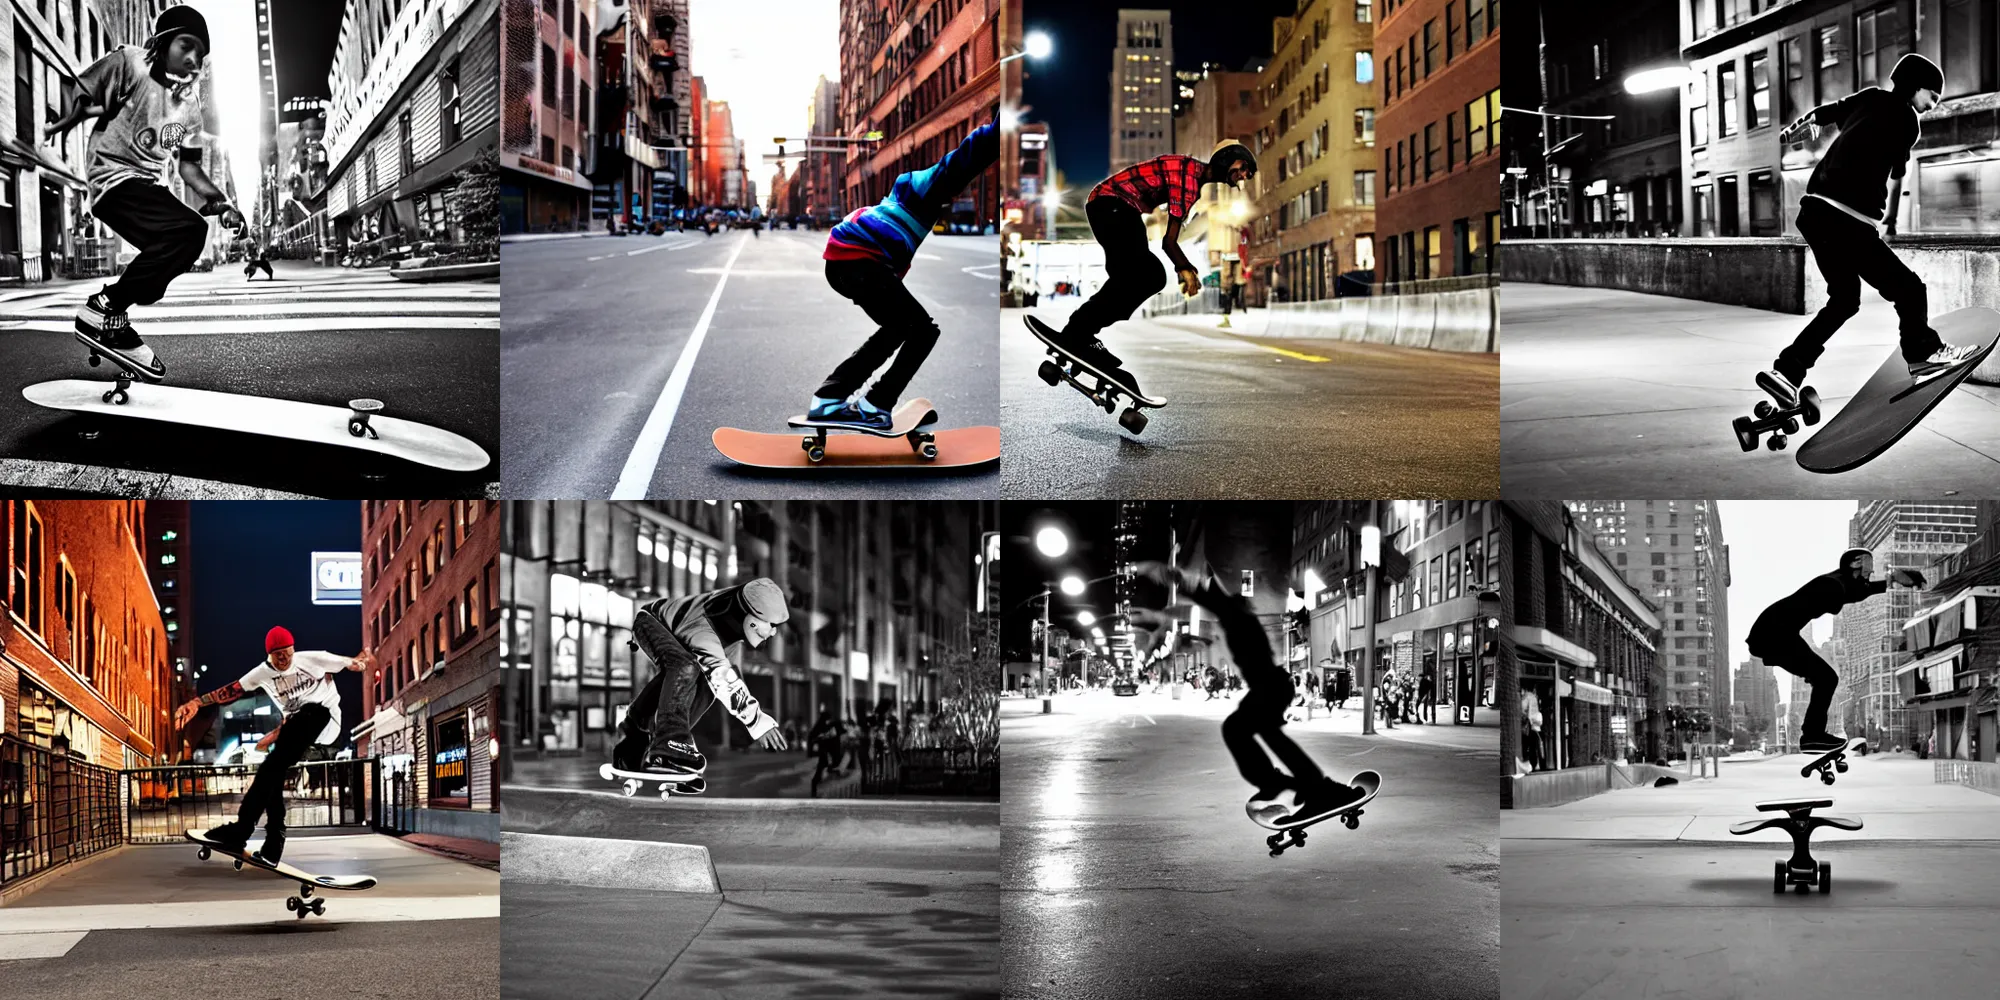 Prompt: Skateboarder in a New York street performing a kickflip, skateboard flipping, by J. Grant Brittain, Atiba Jefferson, C. R. Stecyk III, award winning photo, led lighting, night, 130mm, sharp, high res